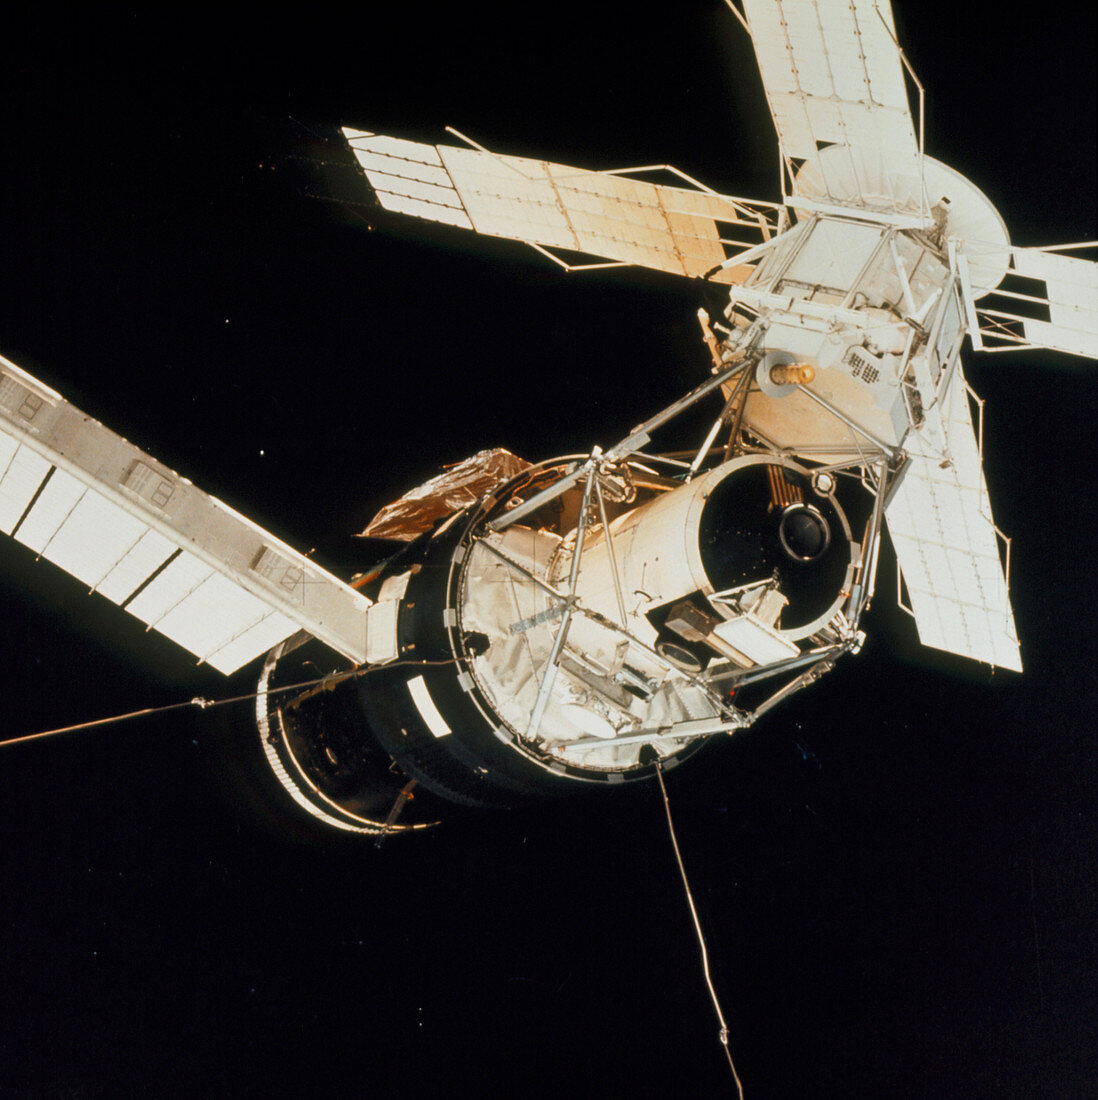 Skylab space station seen from Skylab-3 module